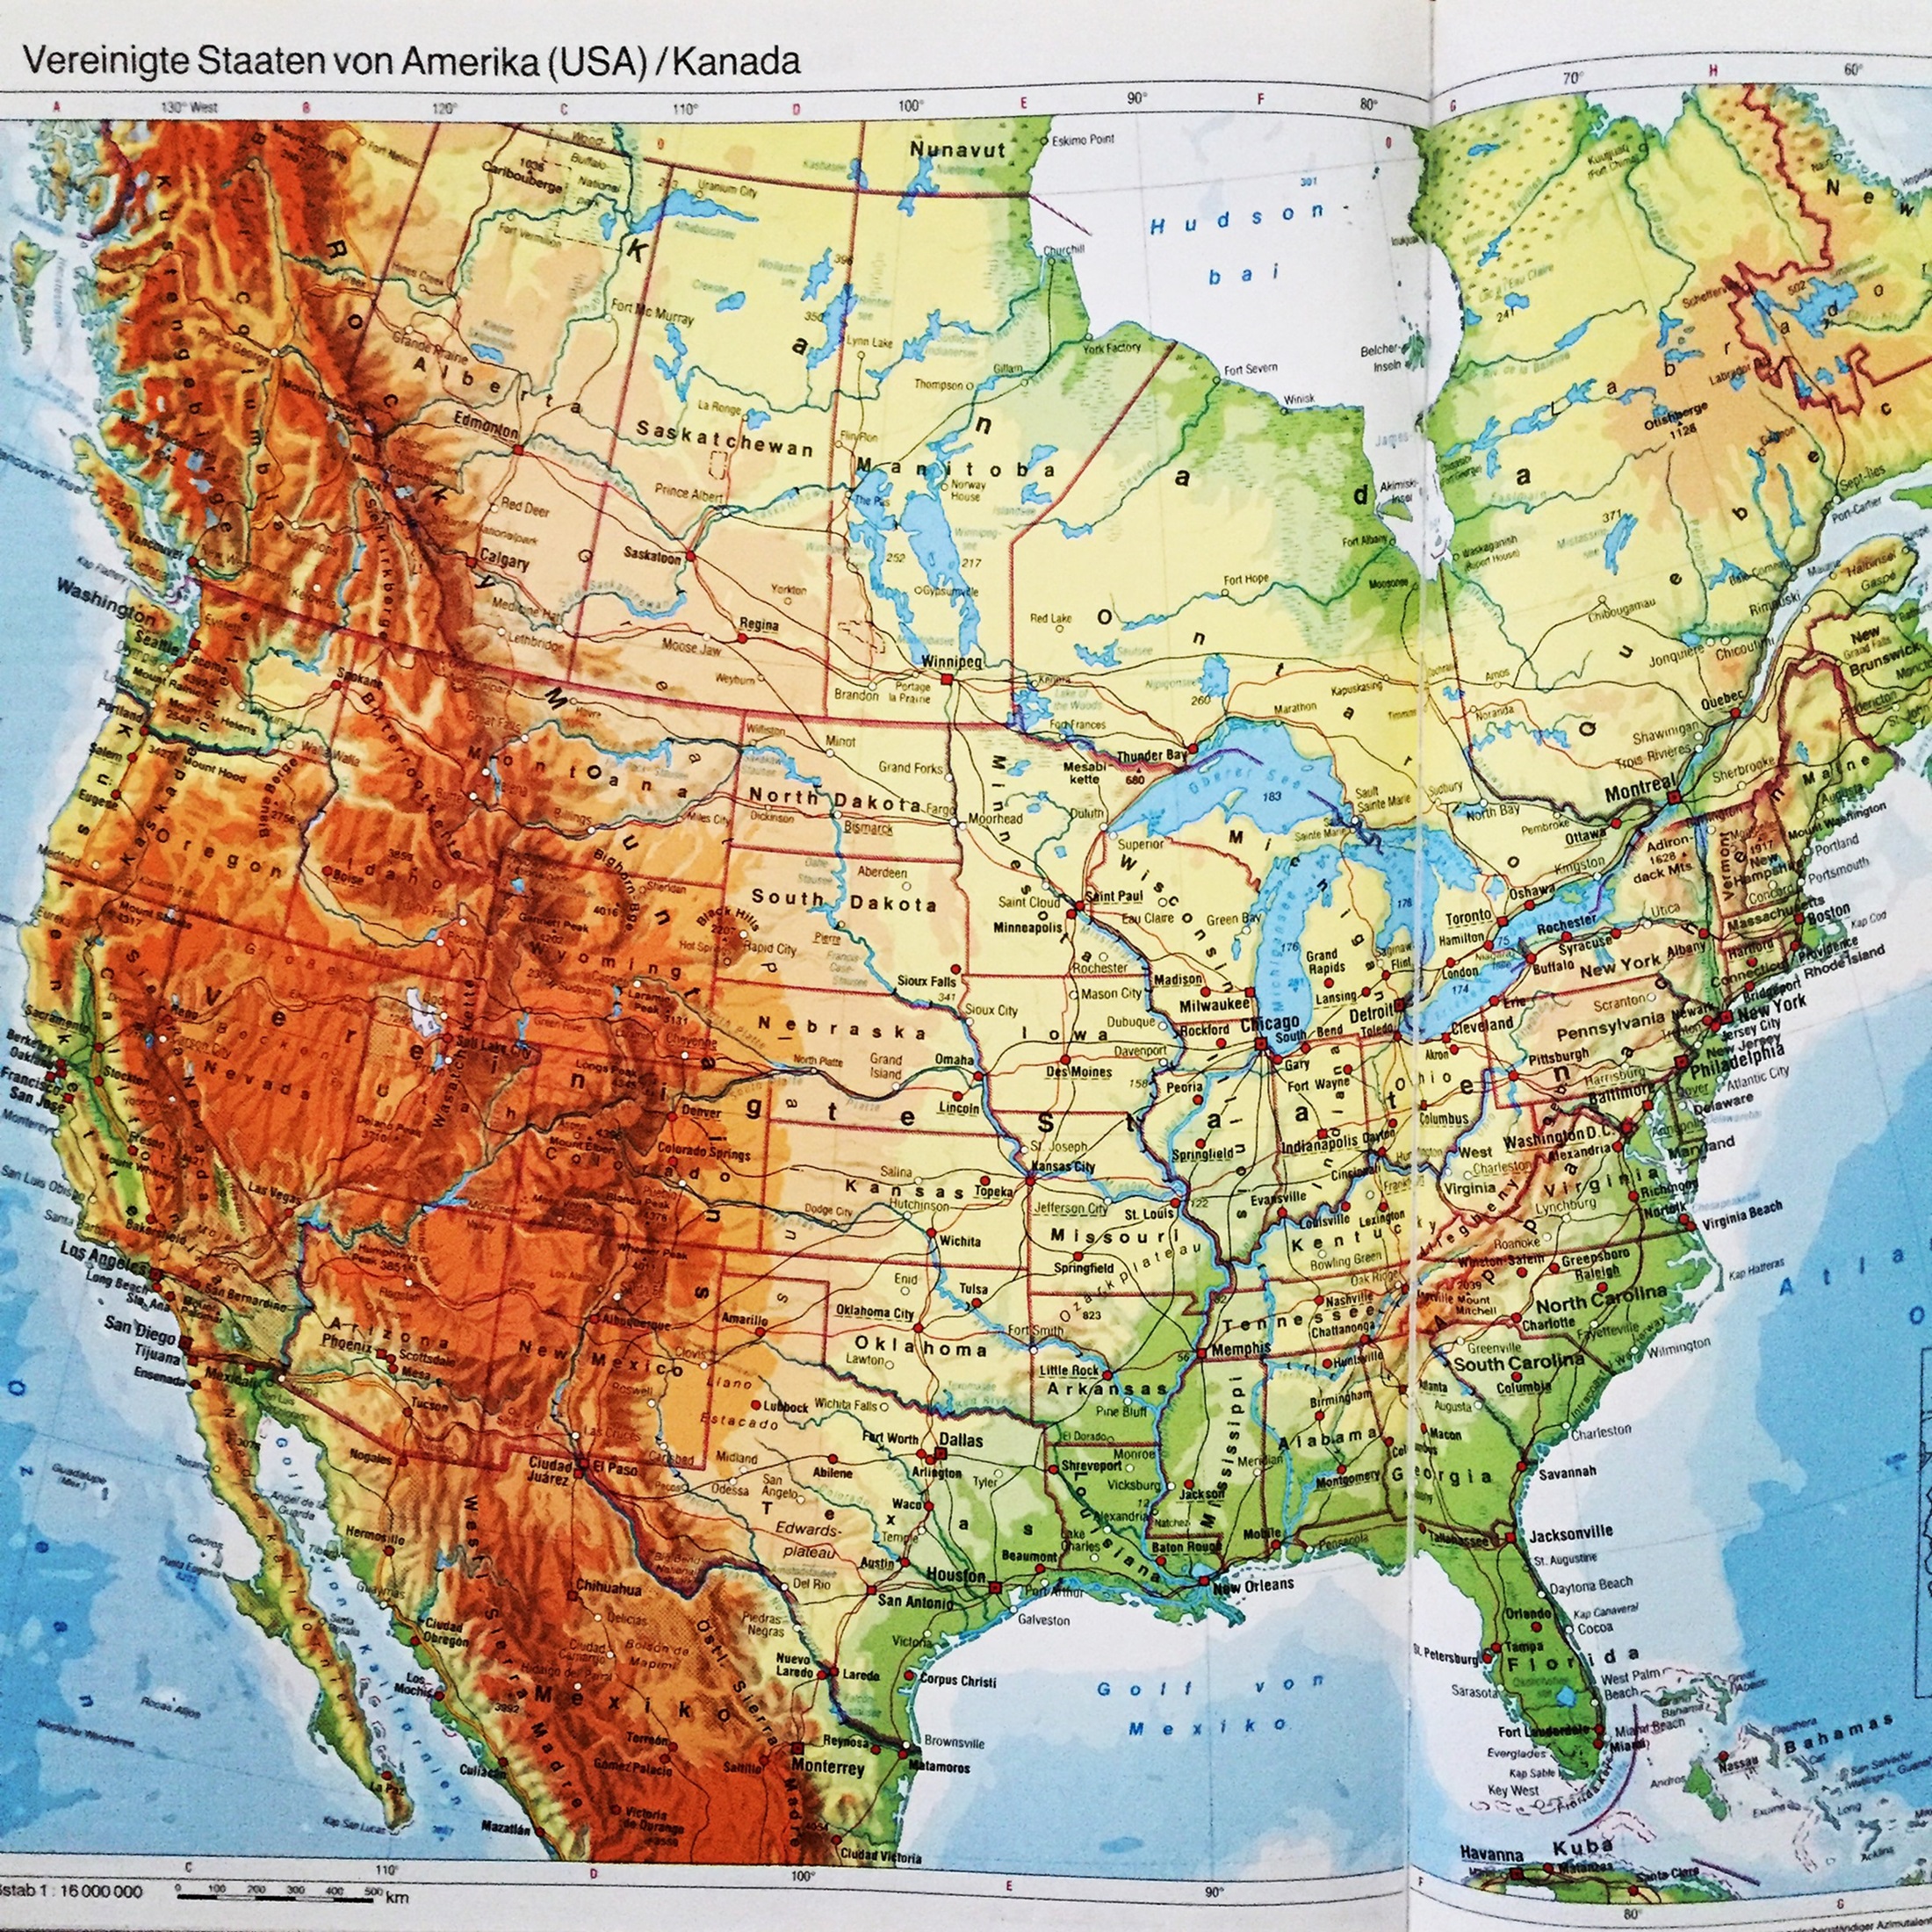 Внутренний сток северной америки. Река Арканзас на карте Северной Америки. Физическая карта США. Реки Северной Америки на карте физическая карта. Физическая карта восточного побережья США.